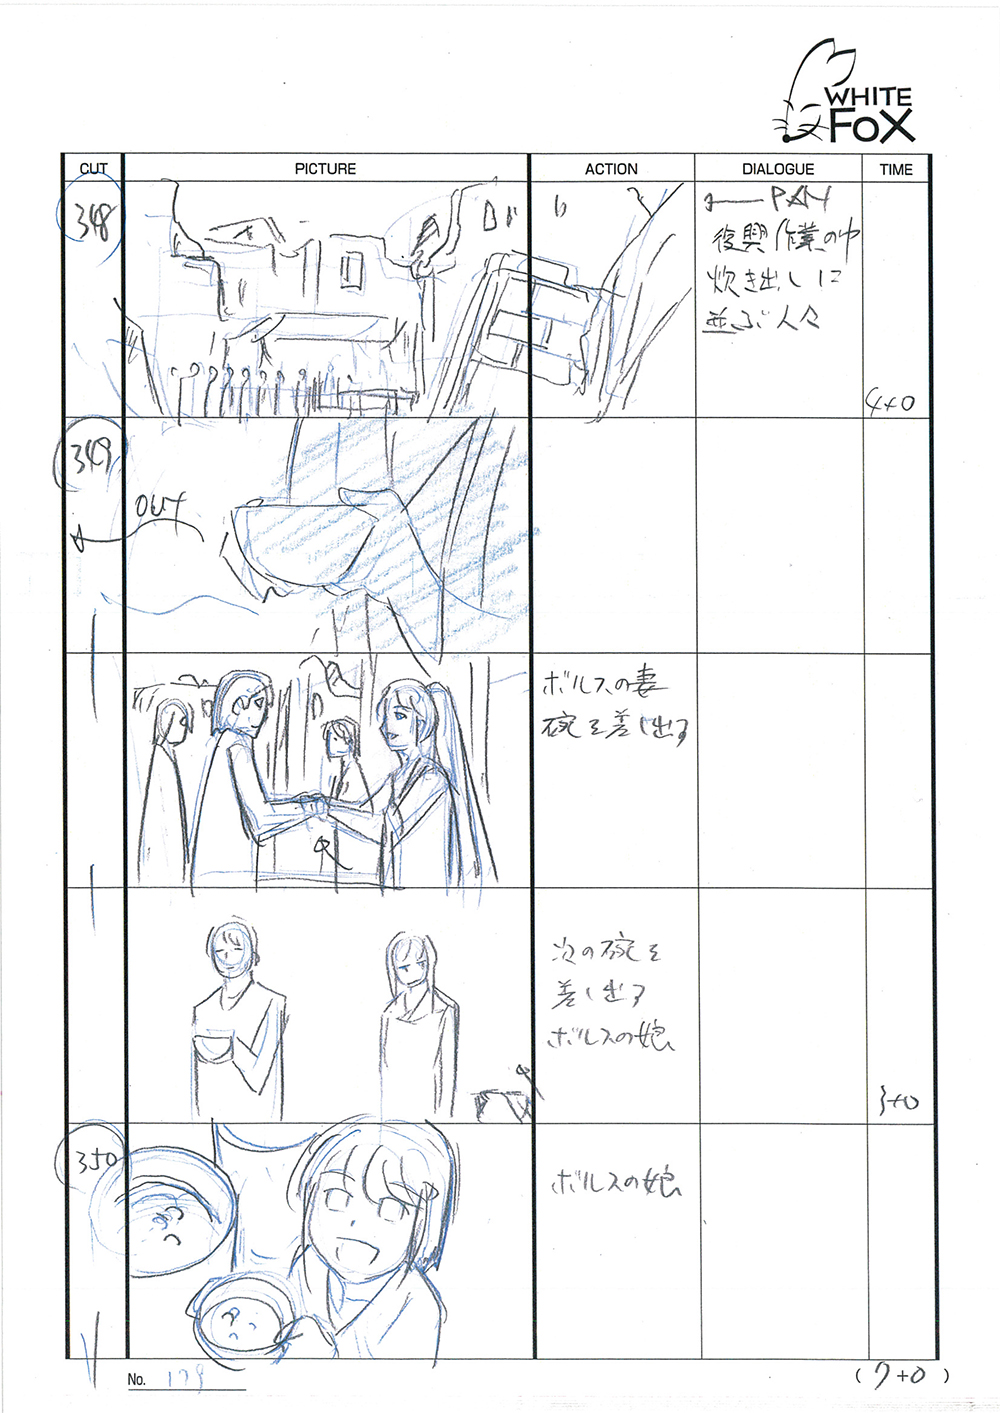 Akame ga Kill Episode 24 Storyboard Leak 184